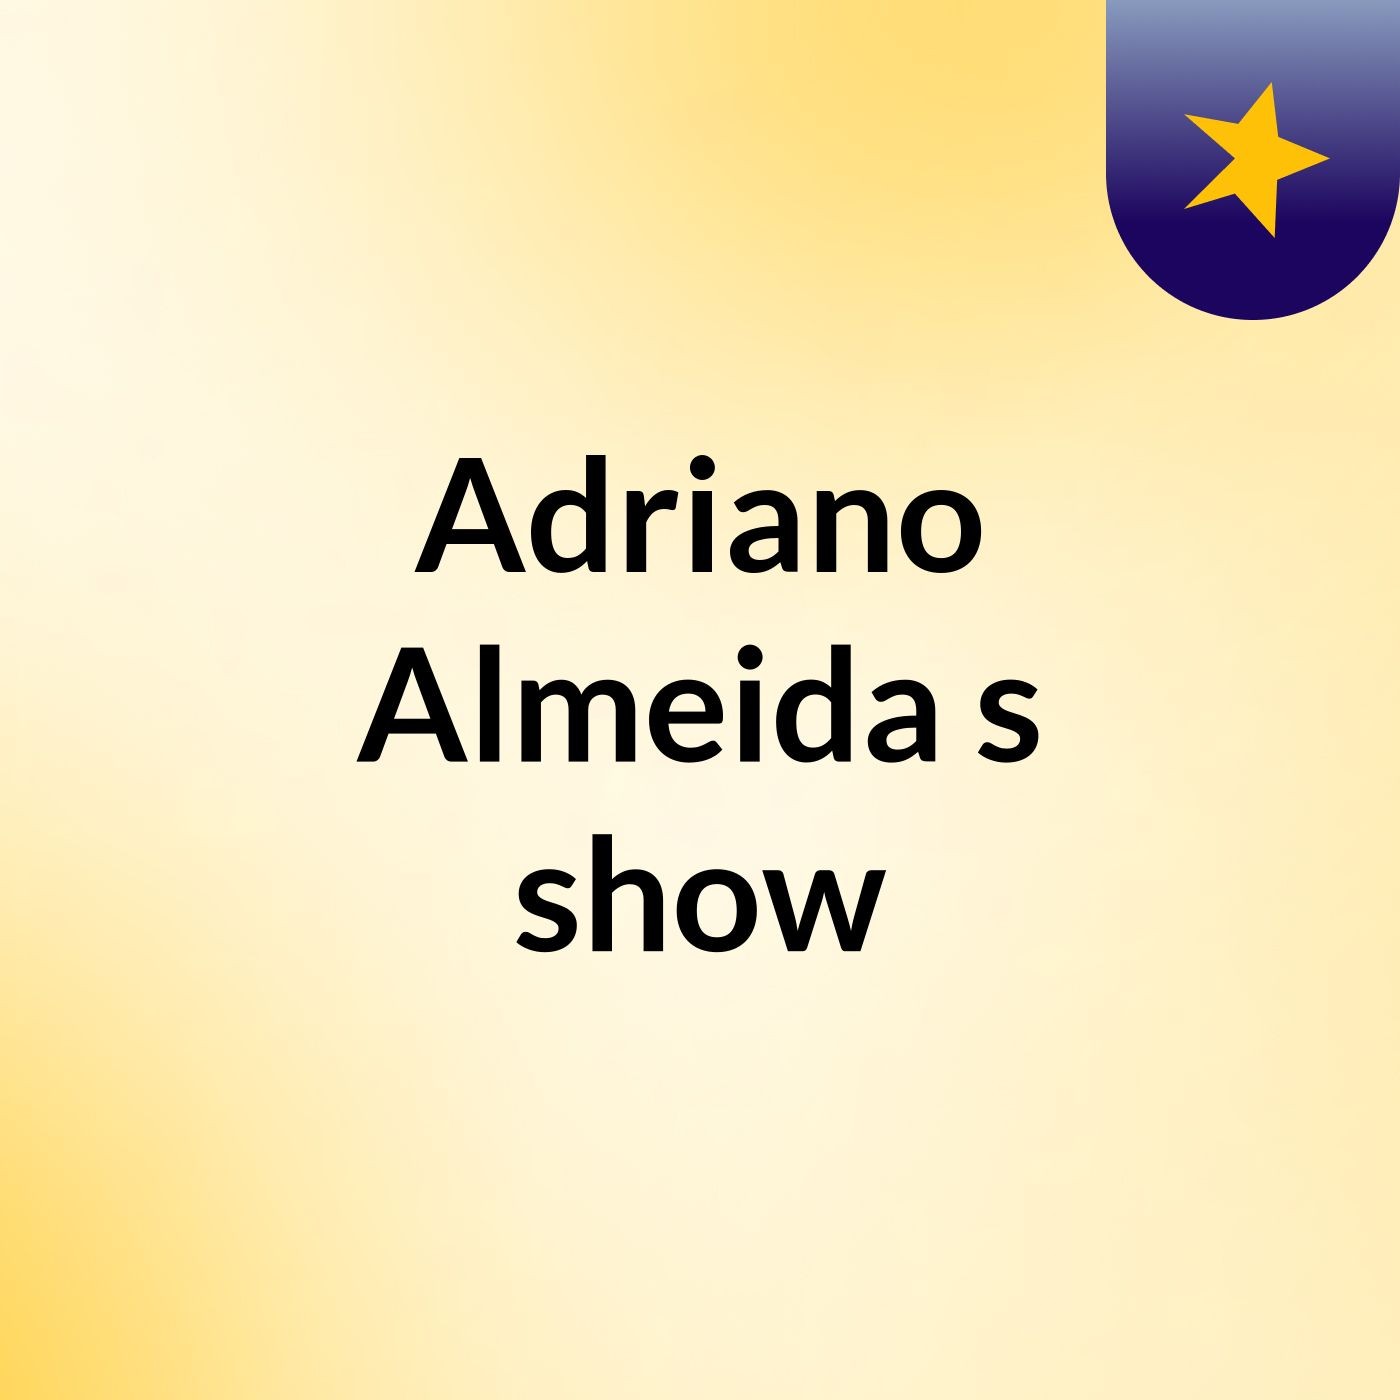 Adriano Almeida's show